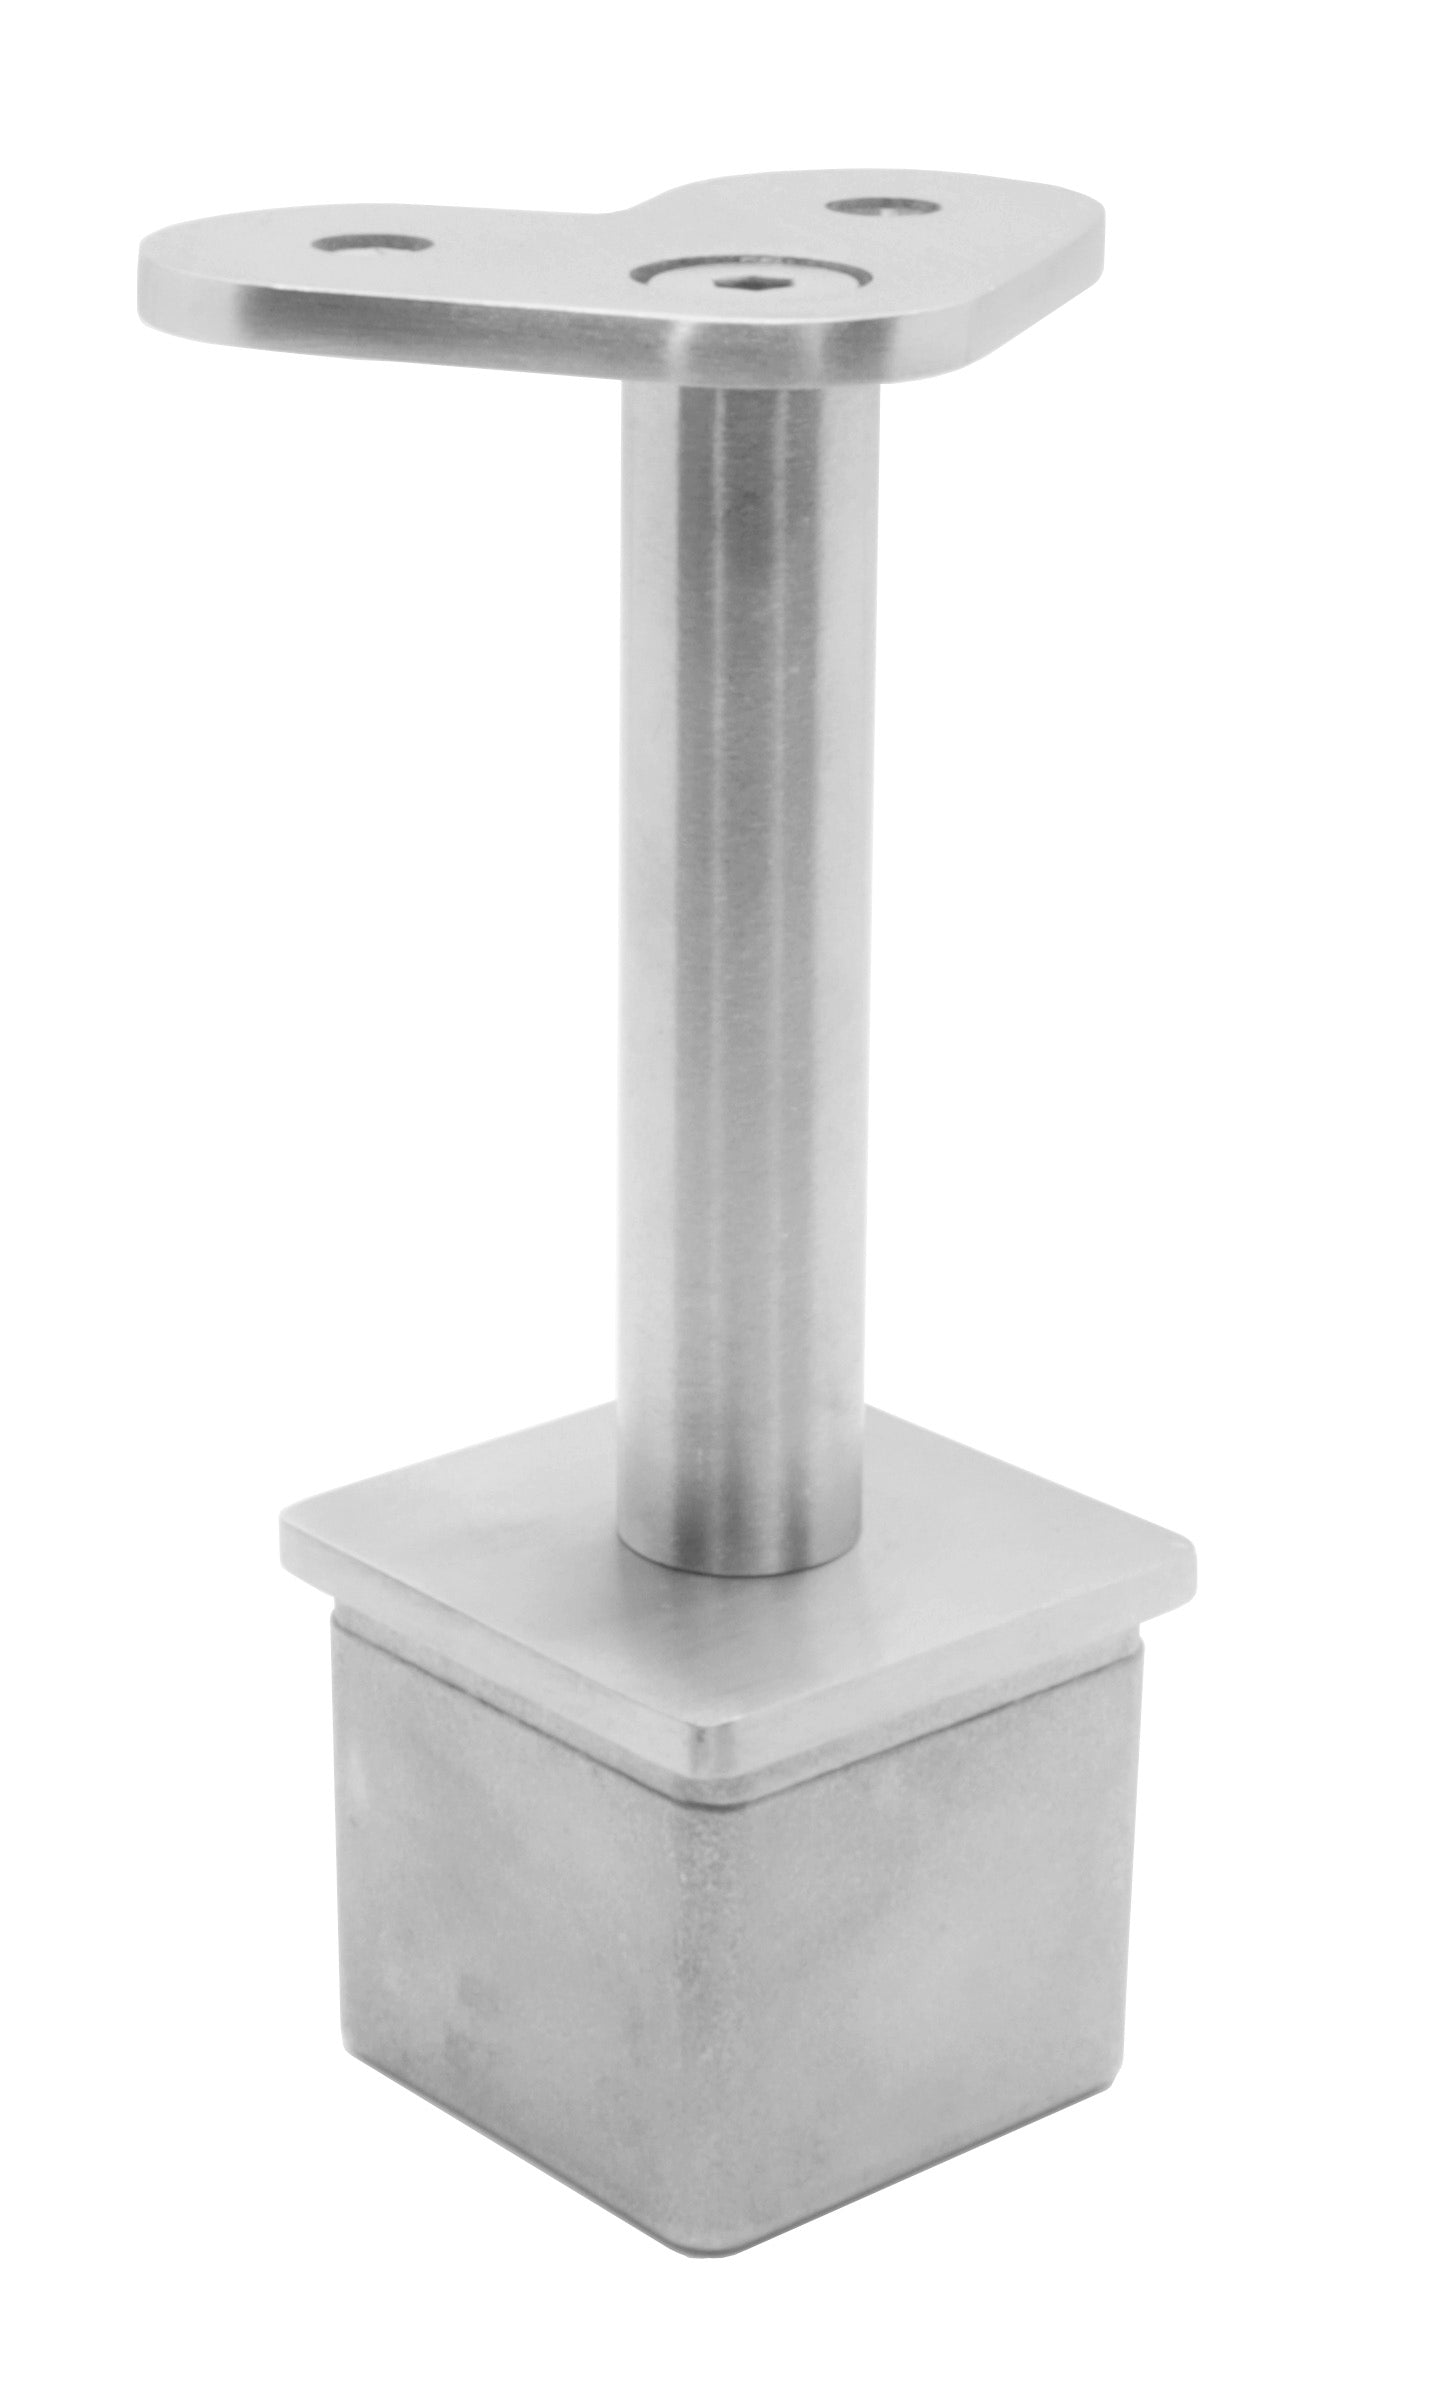 90 Degree Round Stem Post Handrail Bracket Stainless Steel for 1-1/2" Post Fitting (P0150-90-TOP-ROUND) - SHEMONICO